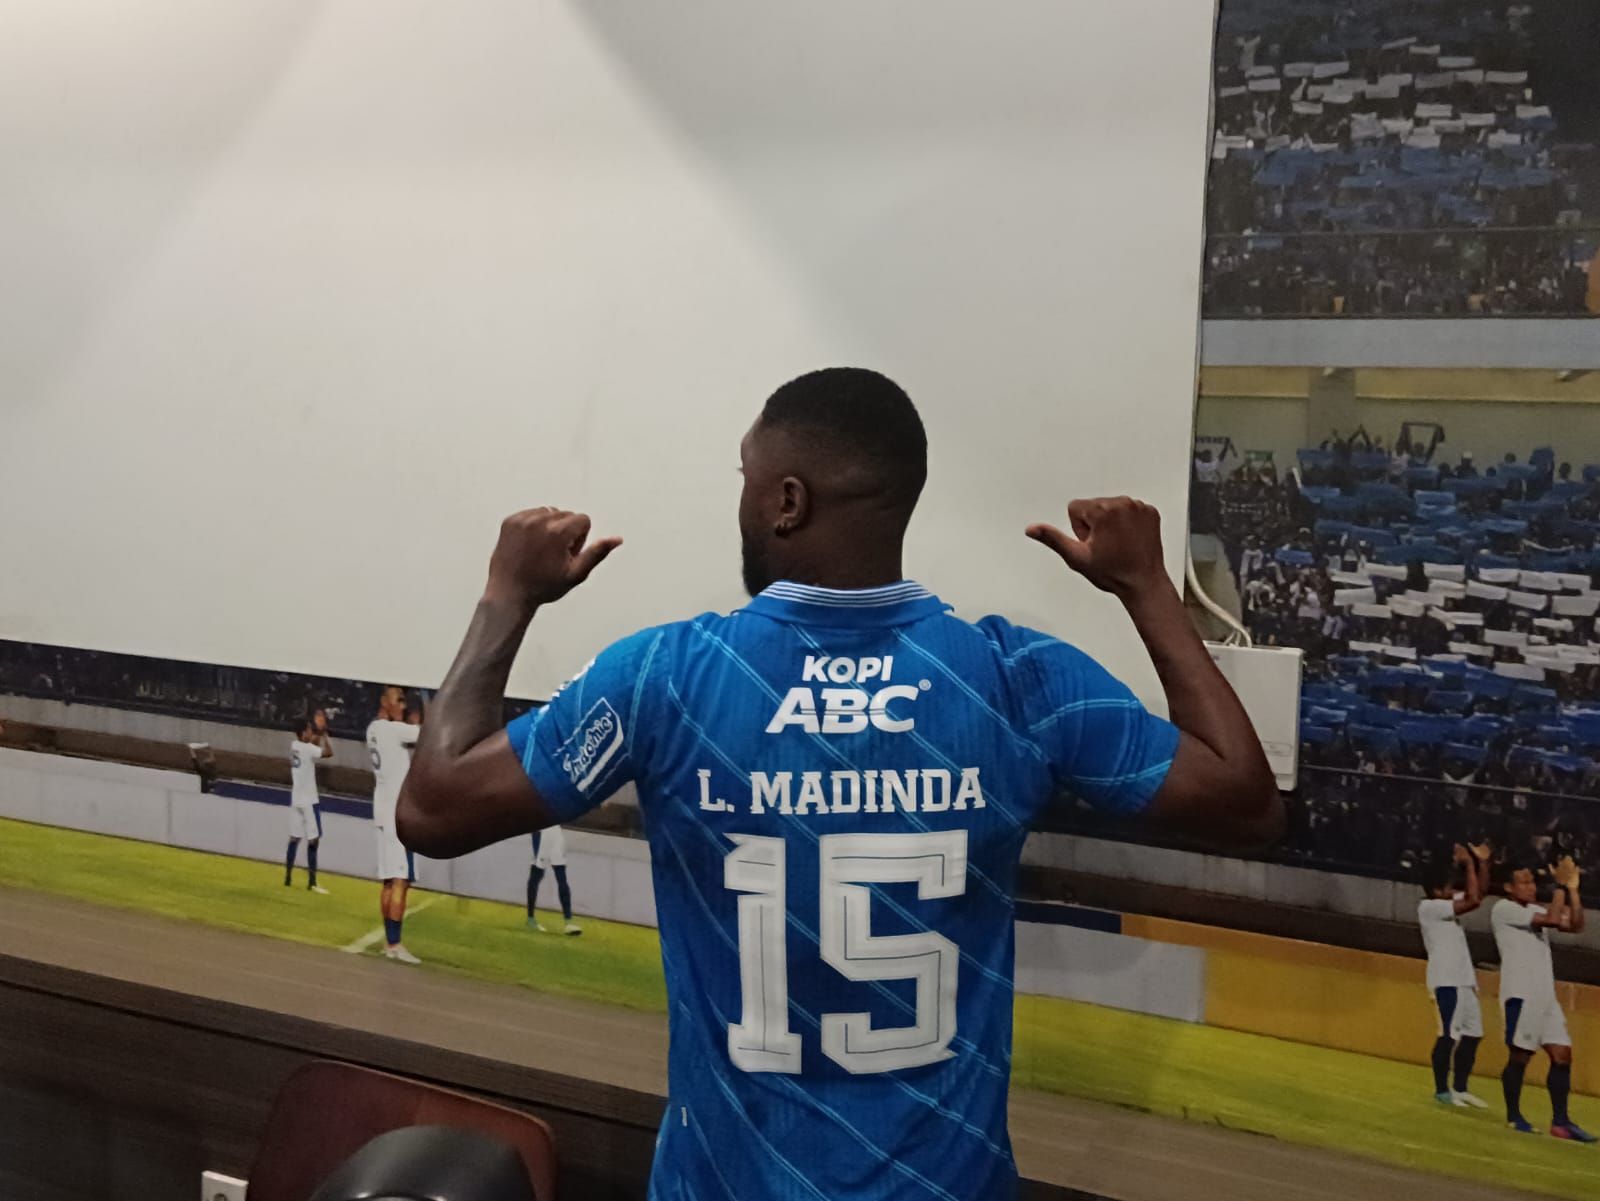 Pemain baru Persib Bandung, Levy Madinda dikenalkan ke bobotoh dengan mengenakan nomor punggung 15.